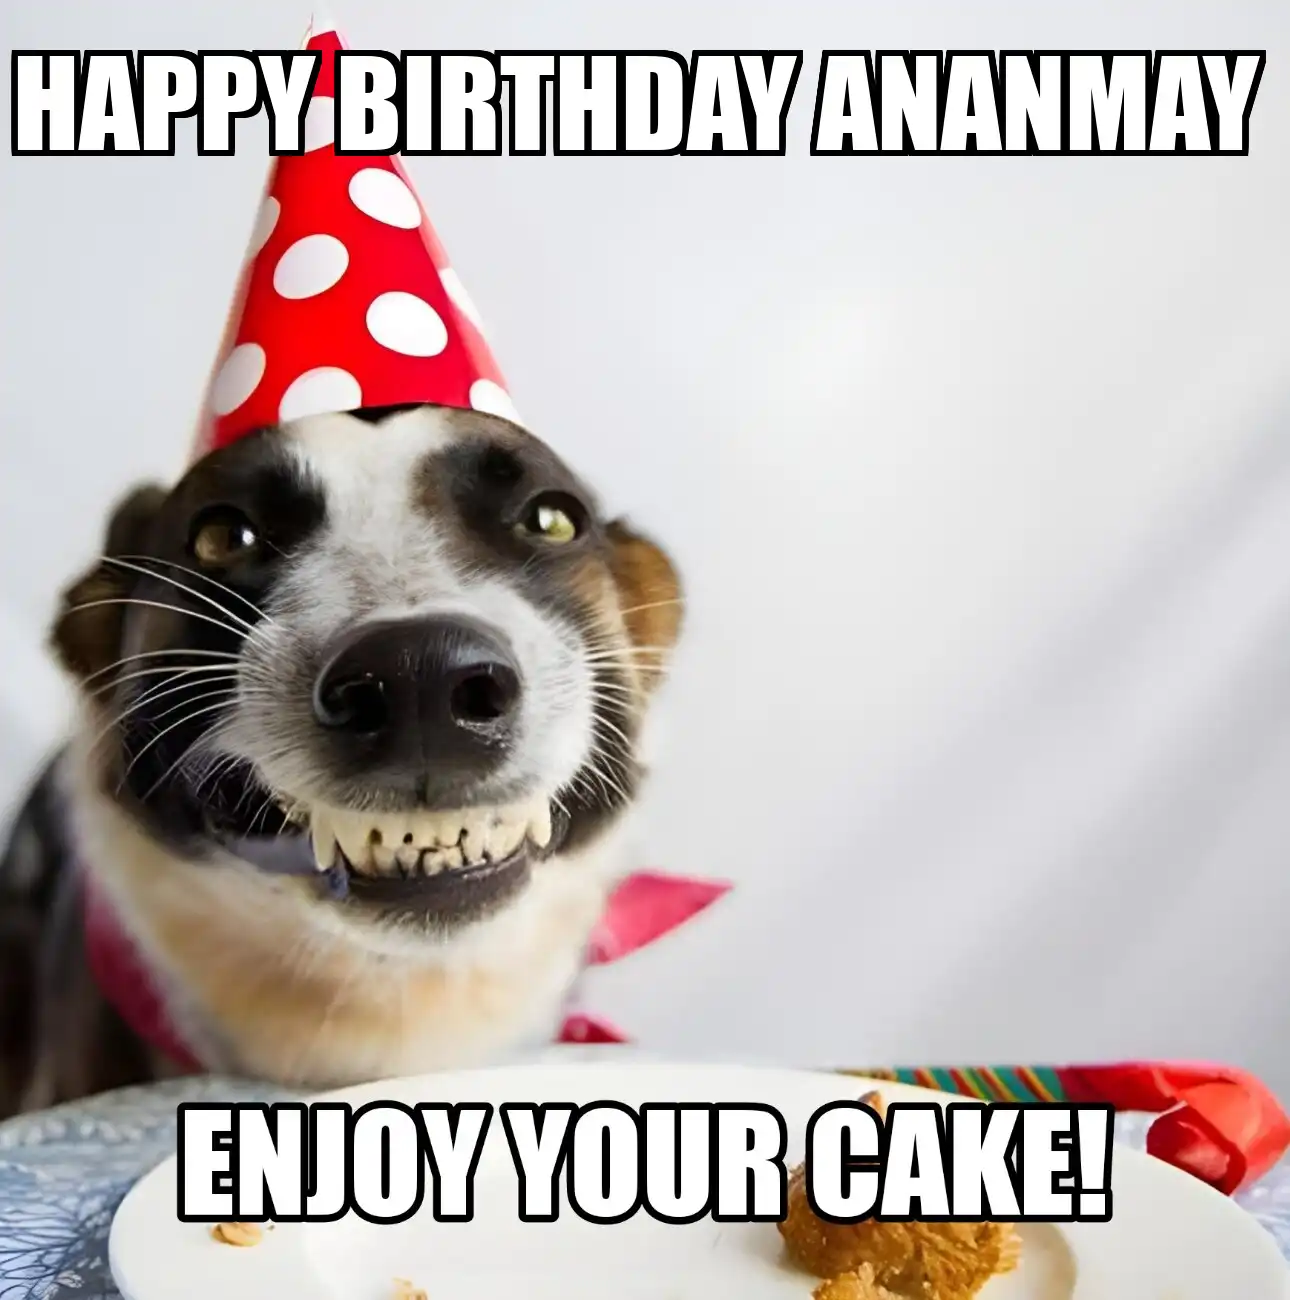 Happy Birthday Ananmay Enjoy Your Cake Dog Meme